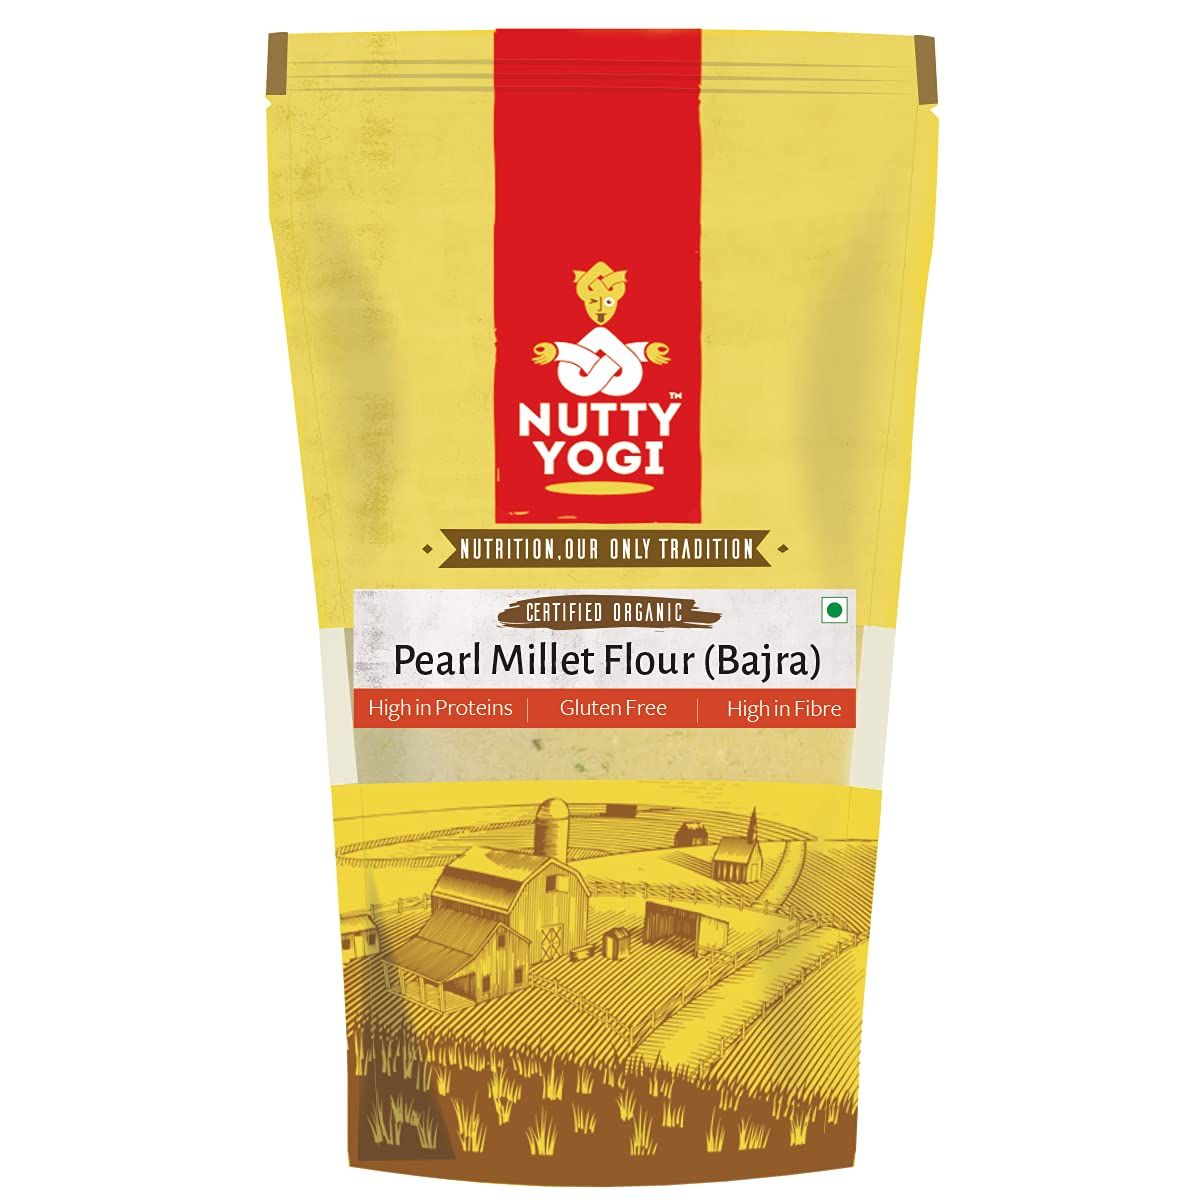 Nutty Yogi Gluten Free Pearl Millet Flour Image